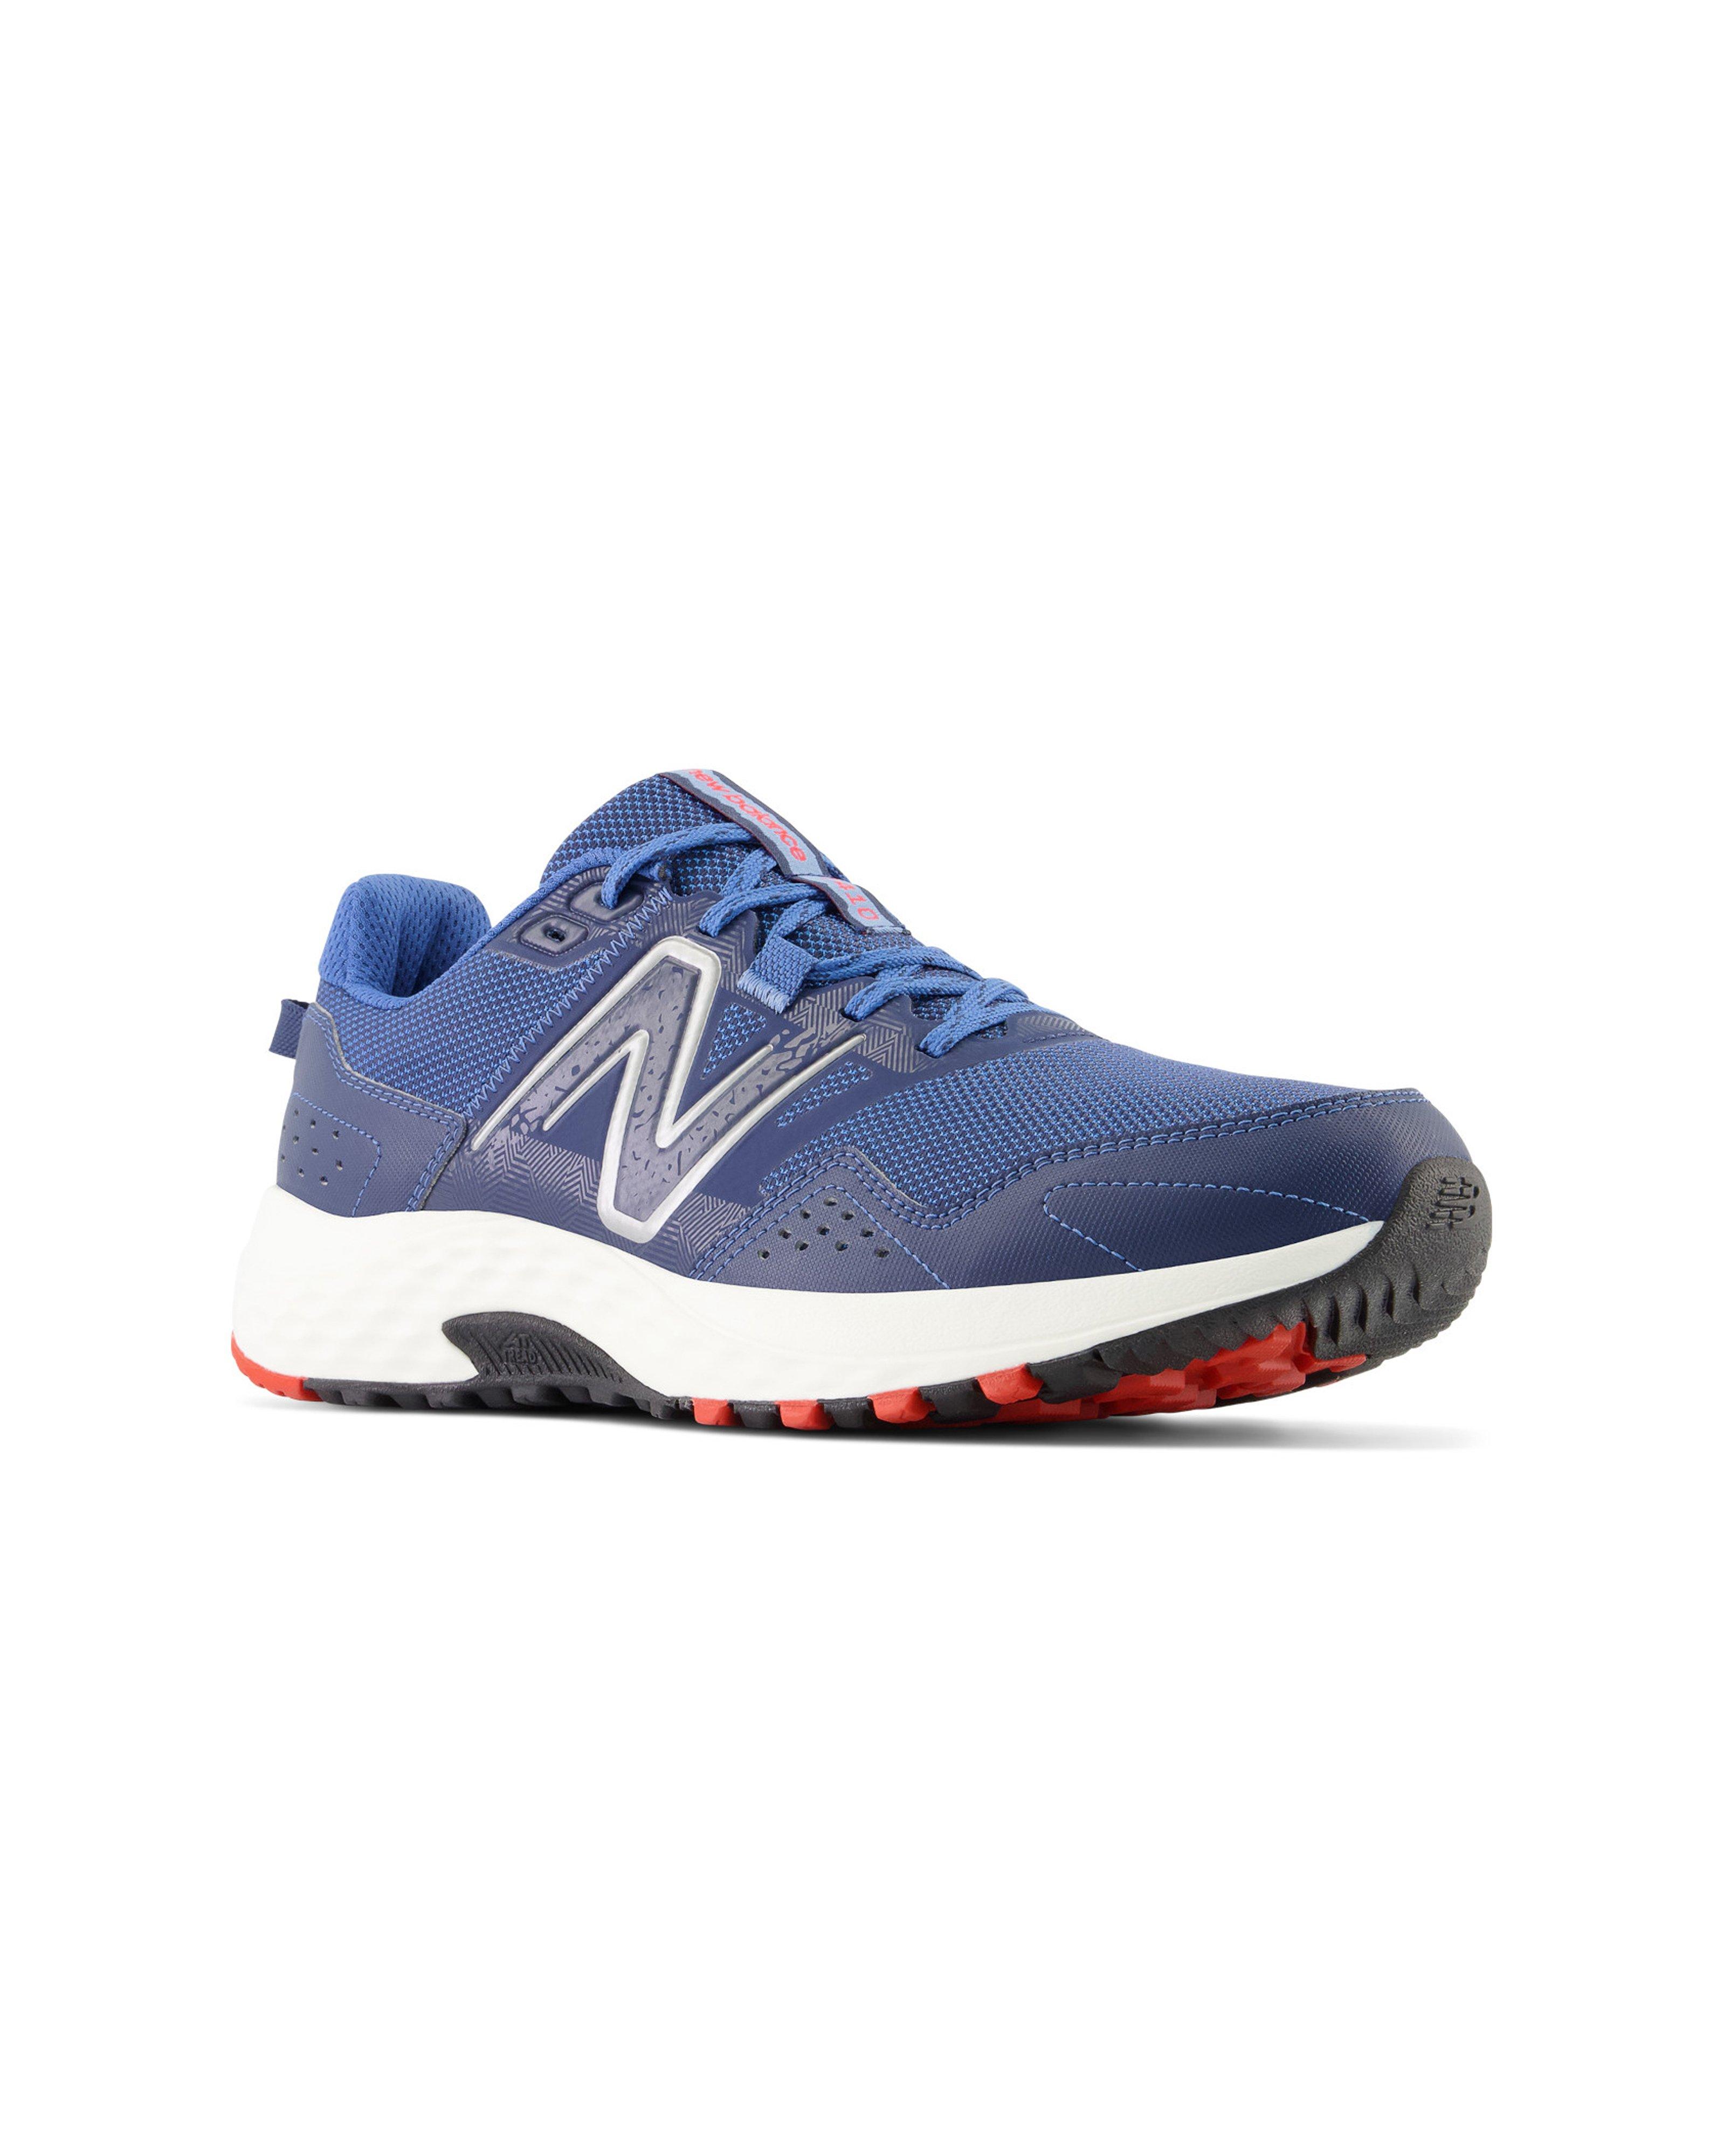 New Balance Men’s T410v8 Trail Running Shoes -  Navy